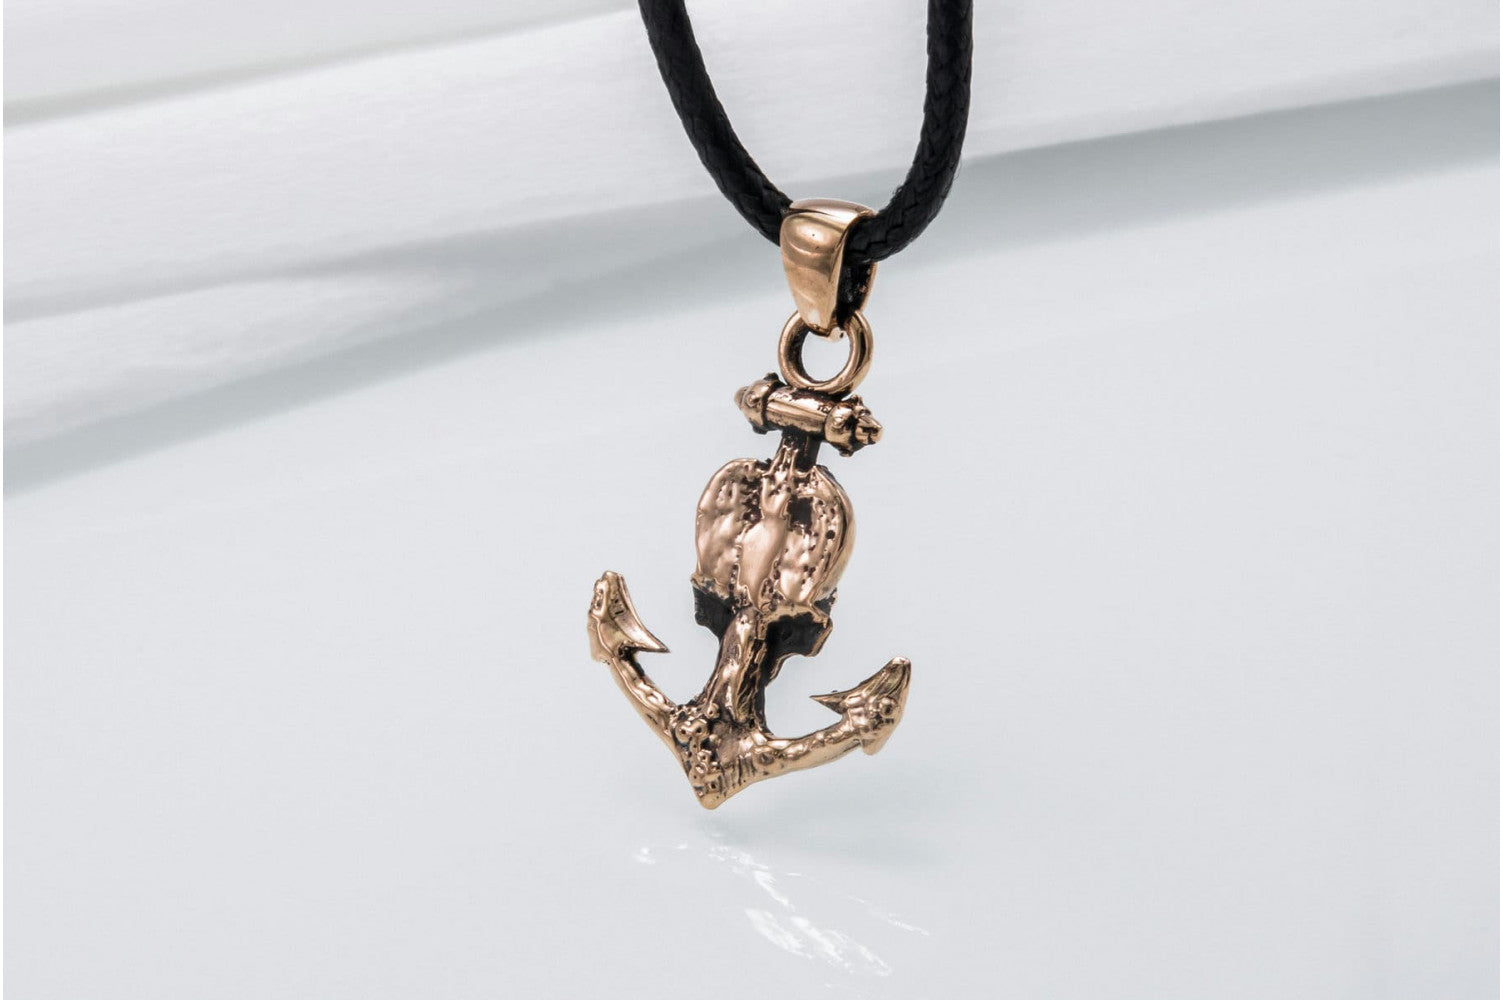 Anchor with Skull Pendant Bronze Unique Handmade Jewelry